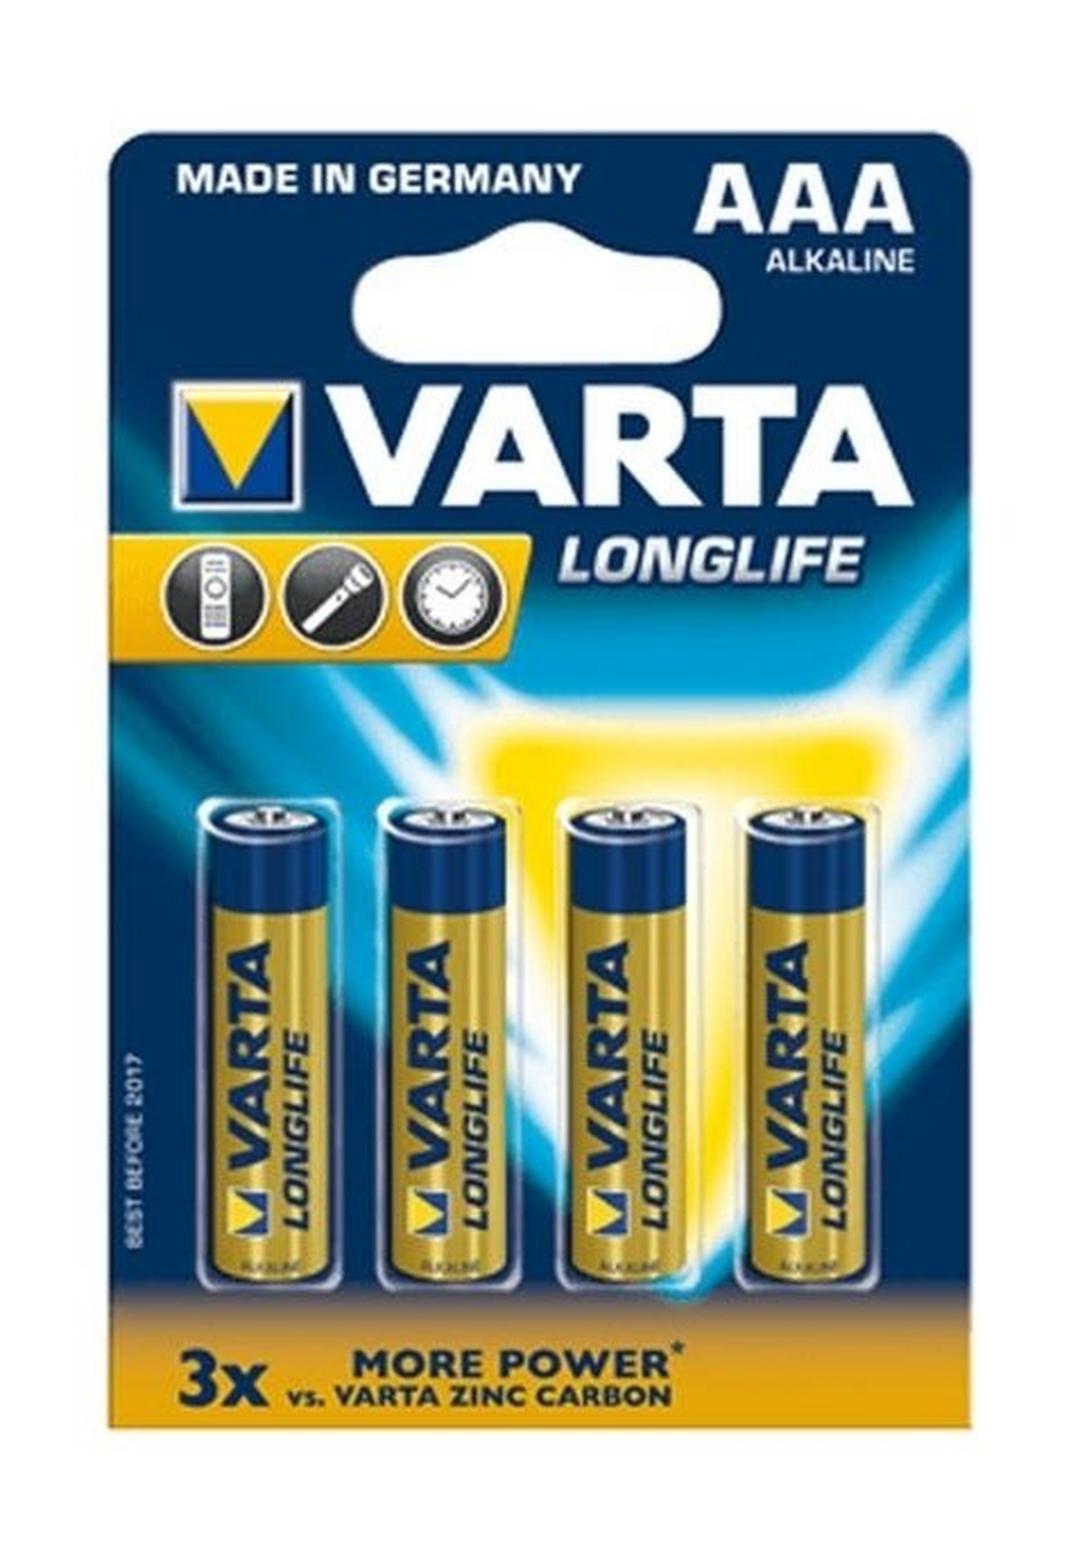 Varta LL 4 AAA Alkaline Battery - 4 Pcs